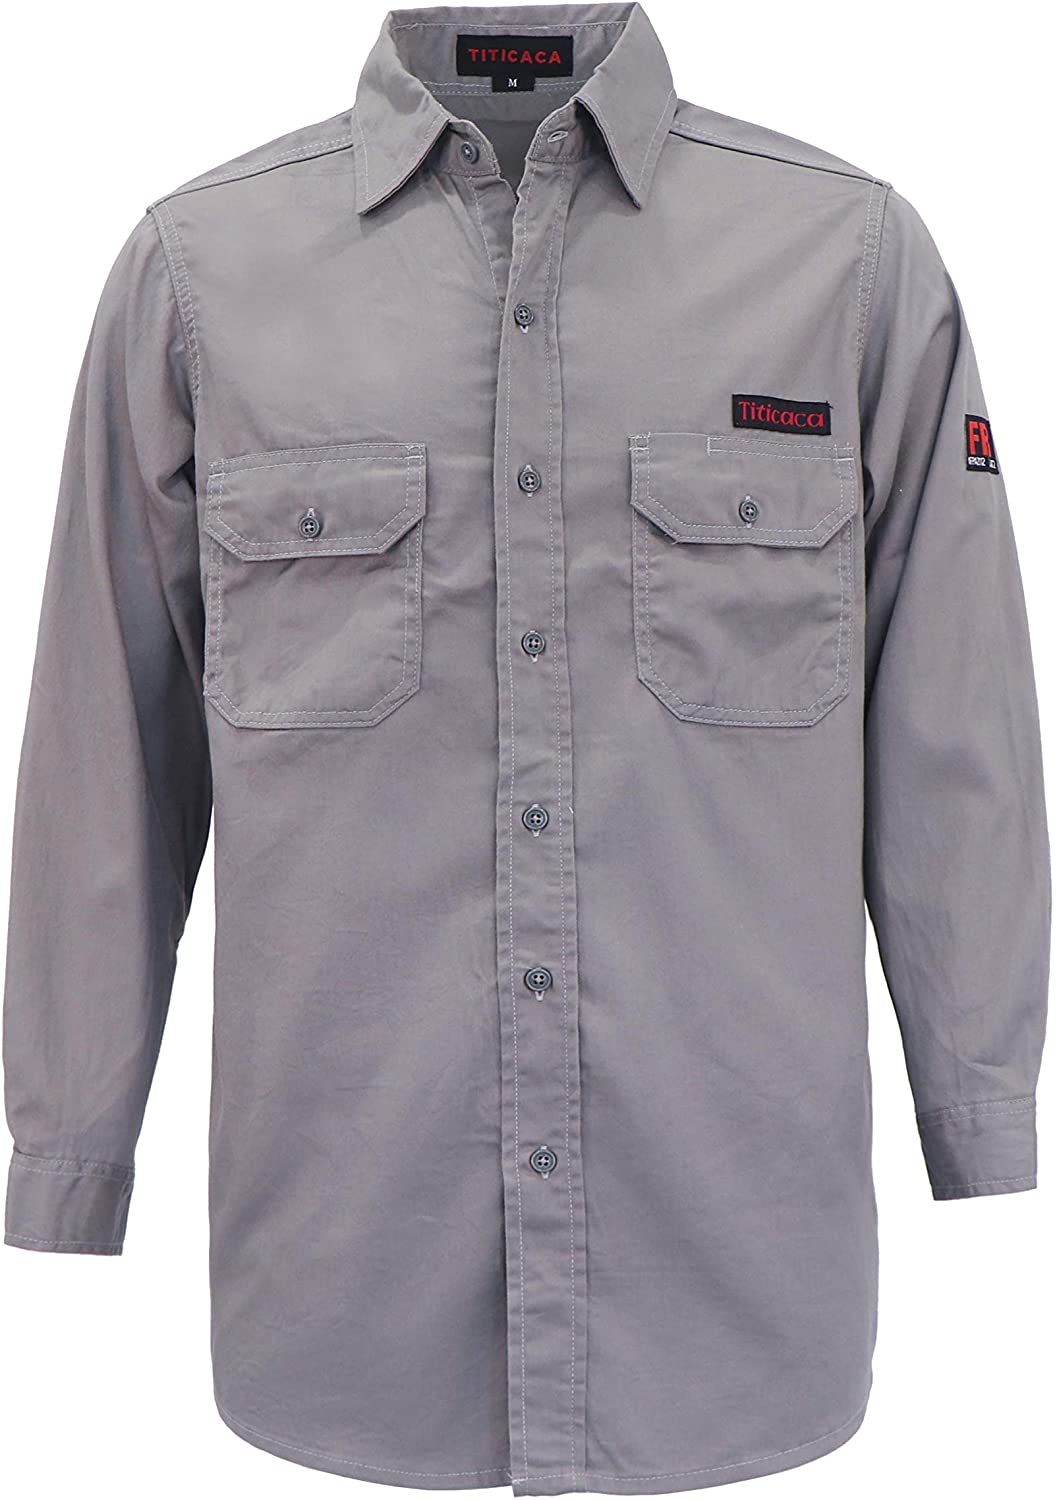 Titicaca FR Shirt Flame Resistant Mens Cotton 7.5oz Lightweight Uniform Shirt 